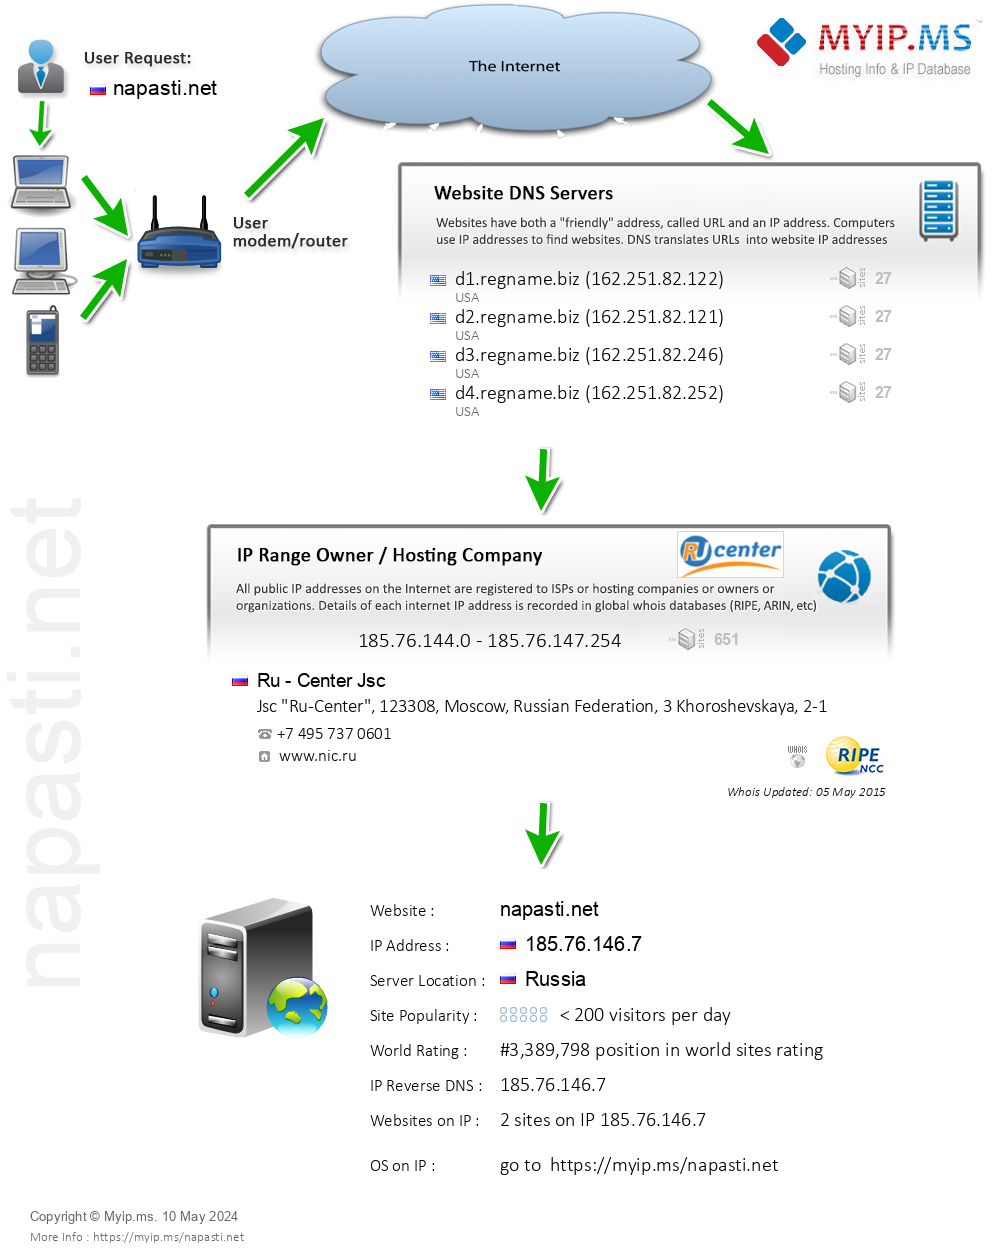 Napasti.net - Website Hosting Visual IP Diagram